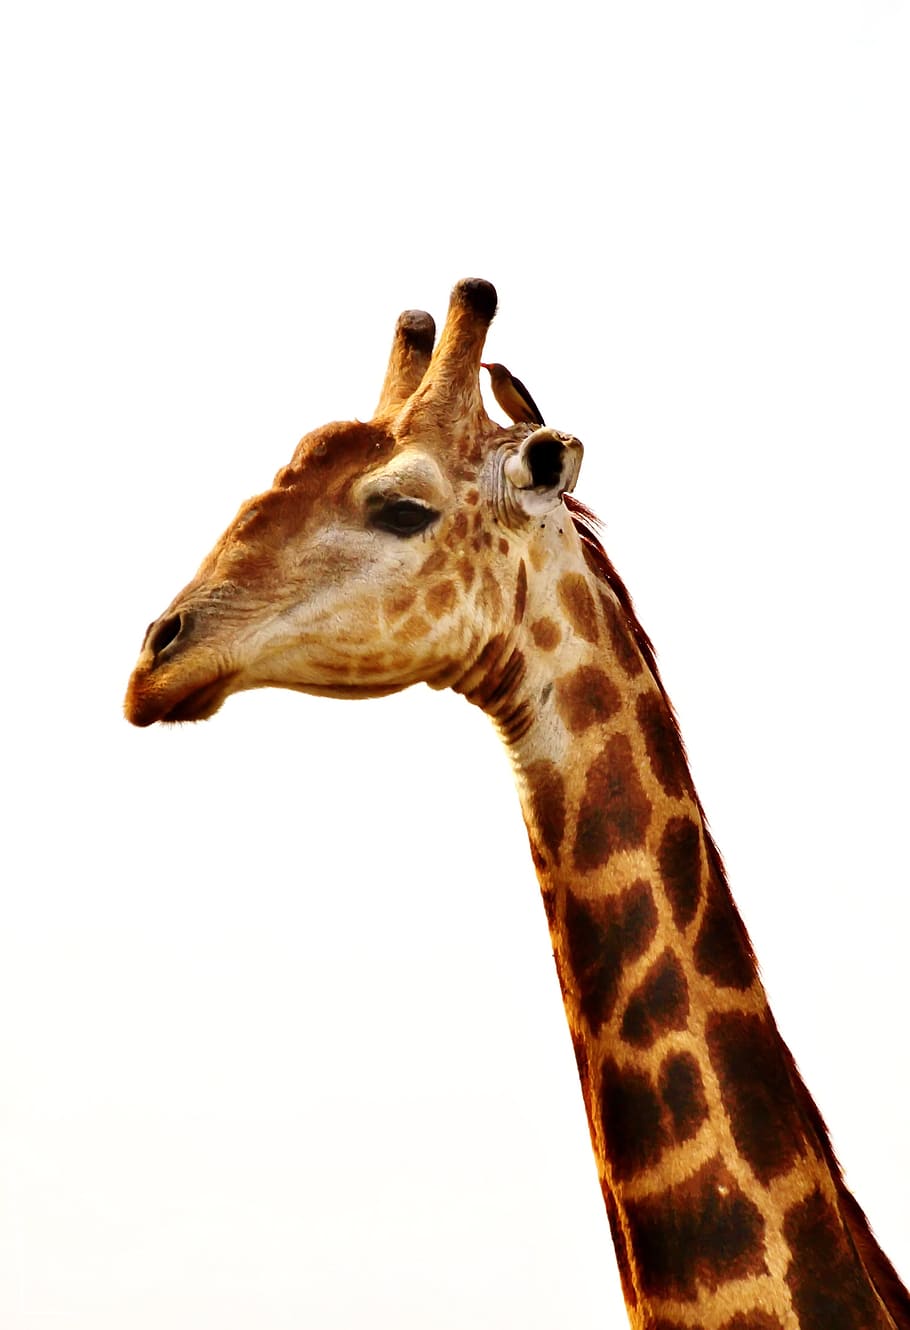 brown, giraffe head, white, surface, Giraffe, Neck, Animal, giraffe neck, wild animal, portrait